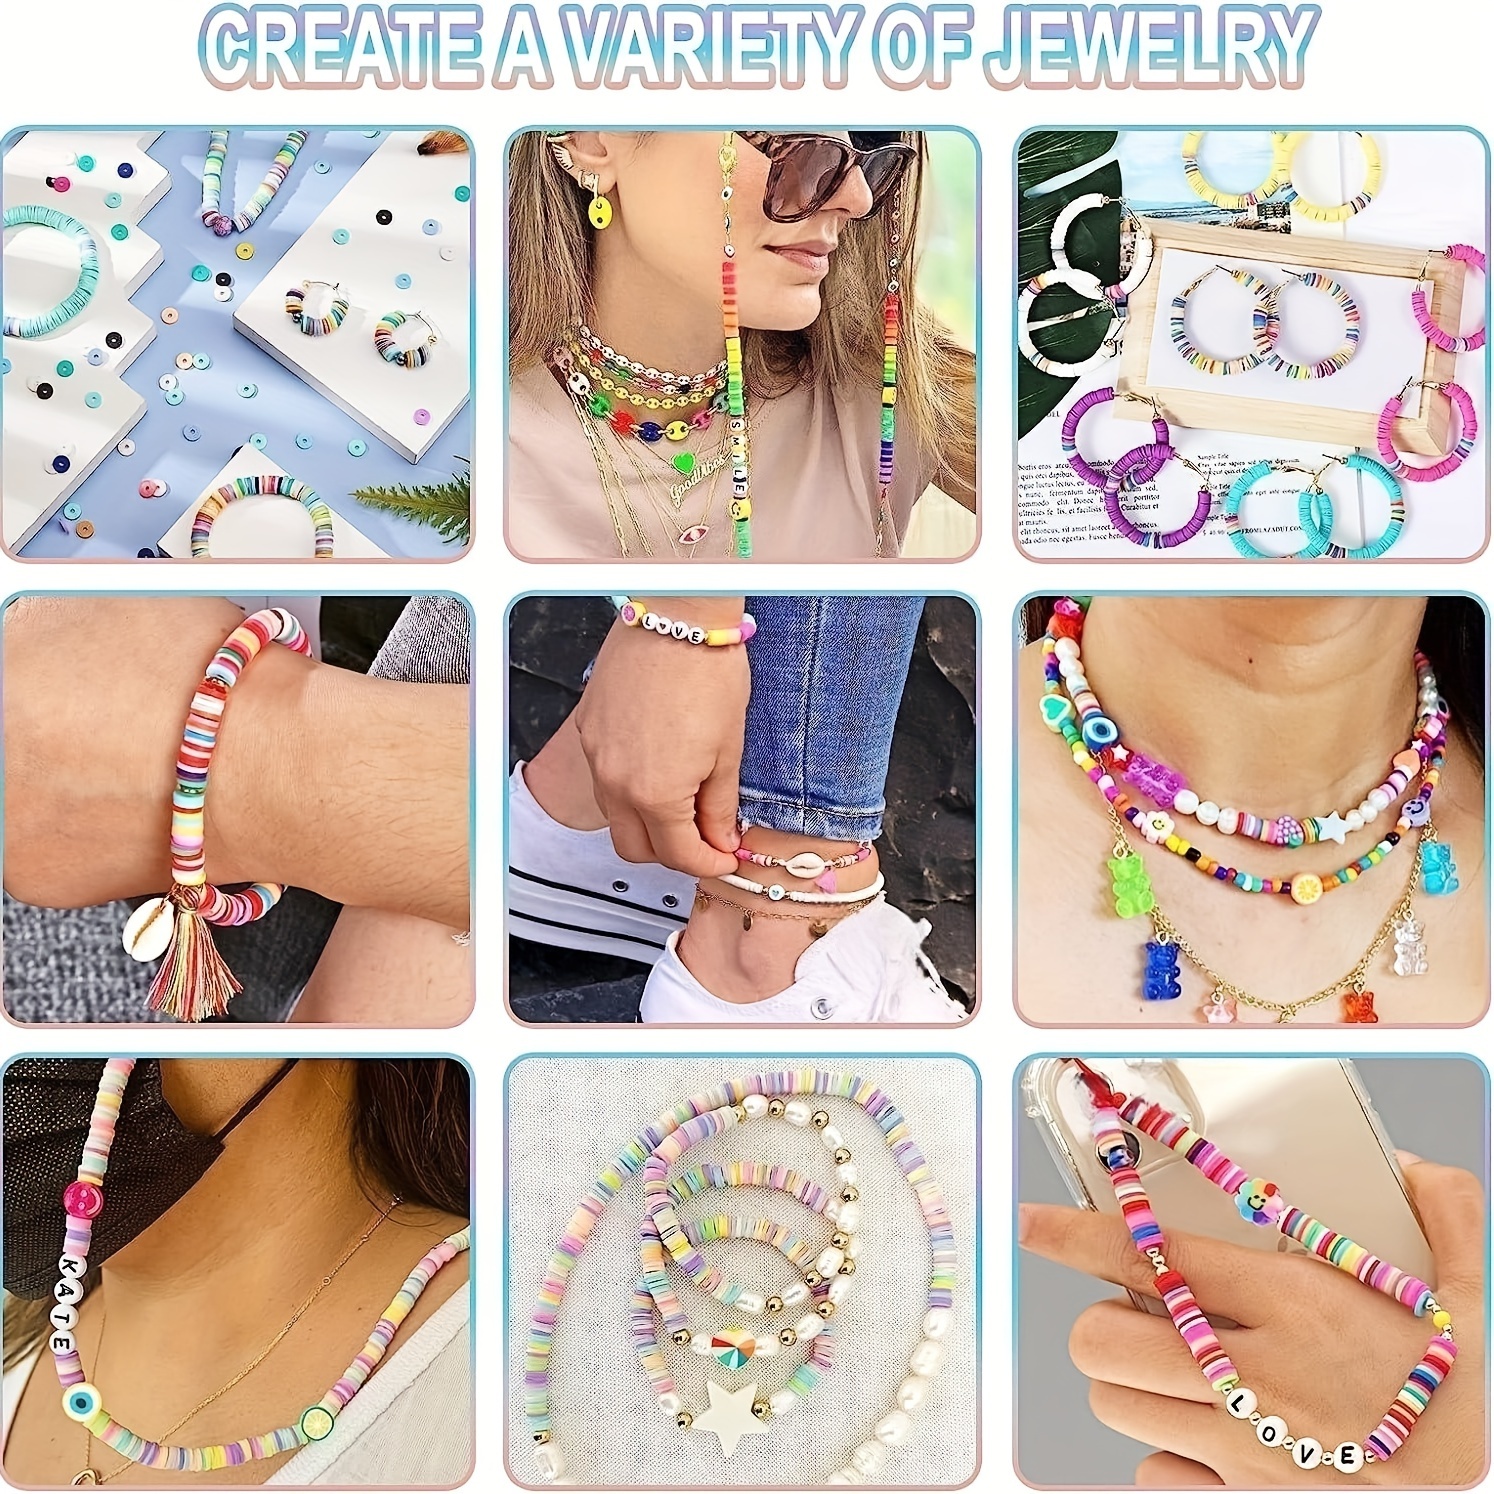 Kit de fabrication de bracelets en perles d'argile – LISAMEON